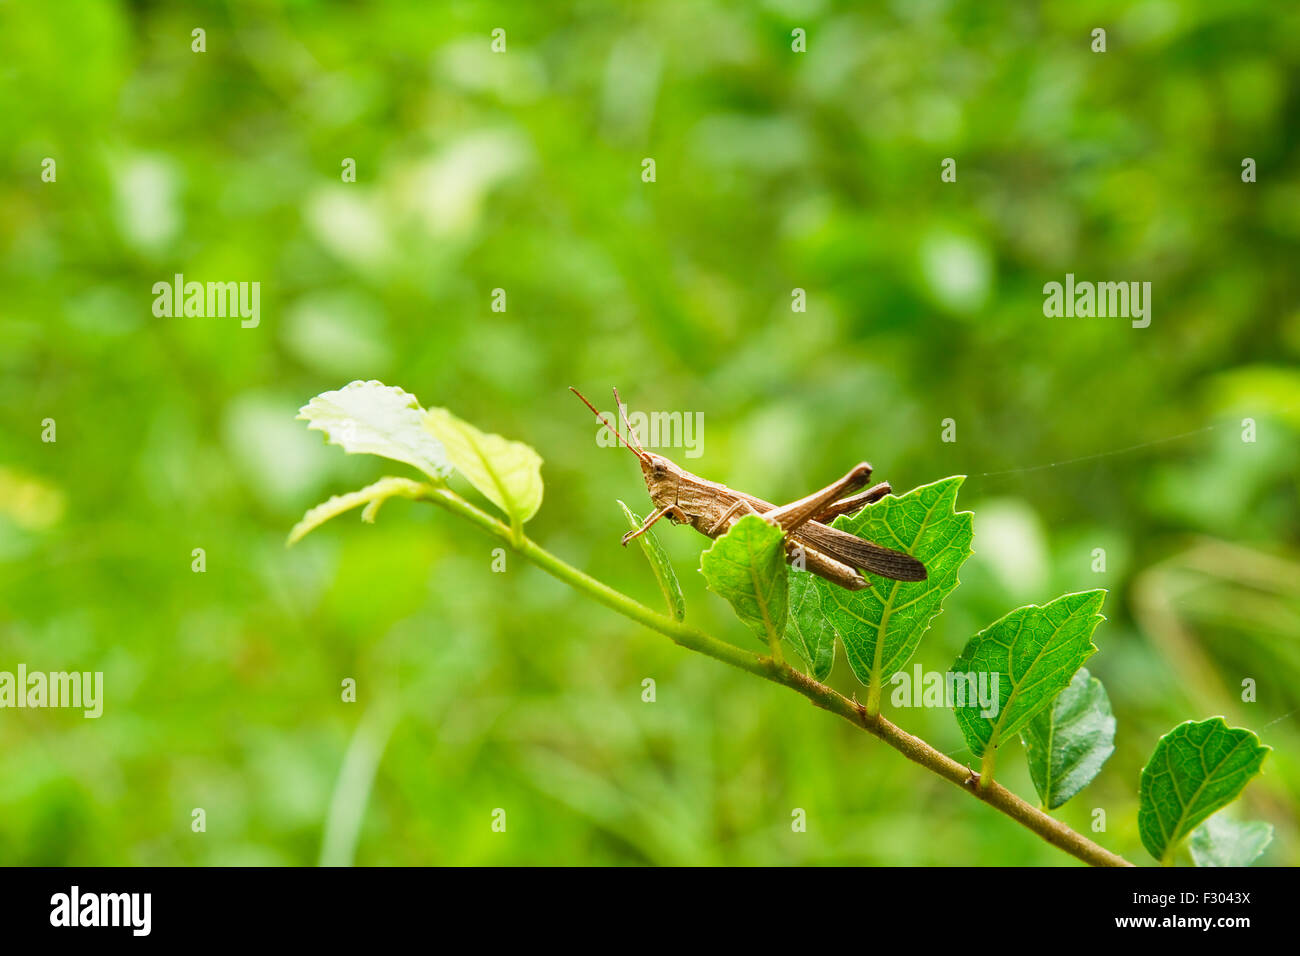 Grasshopper on the leaves. Stock Photo